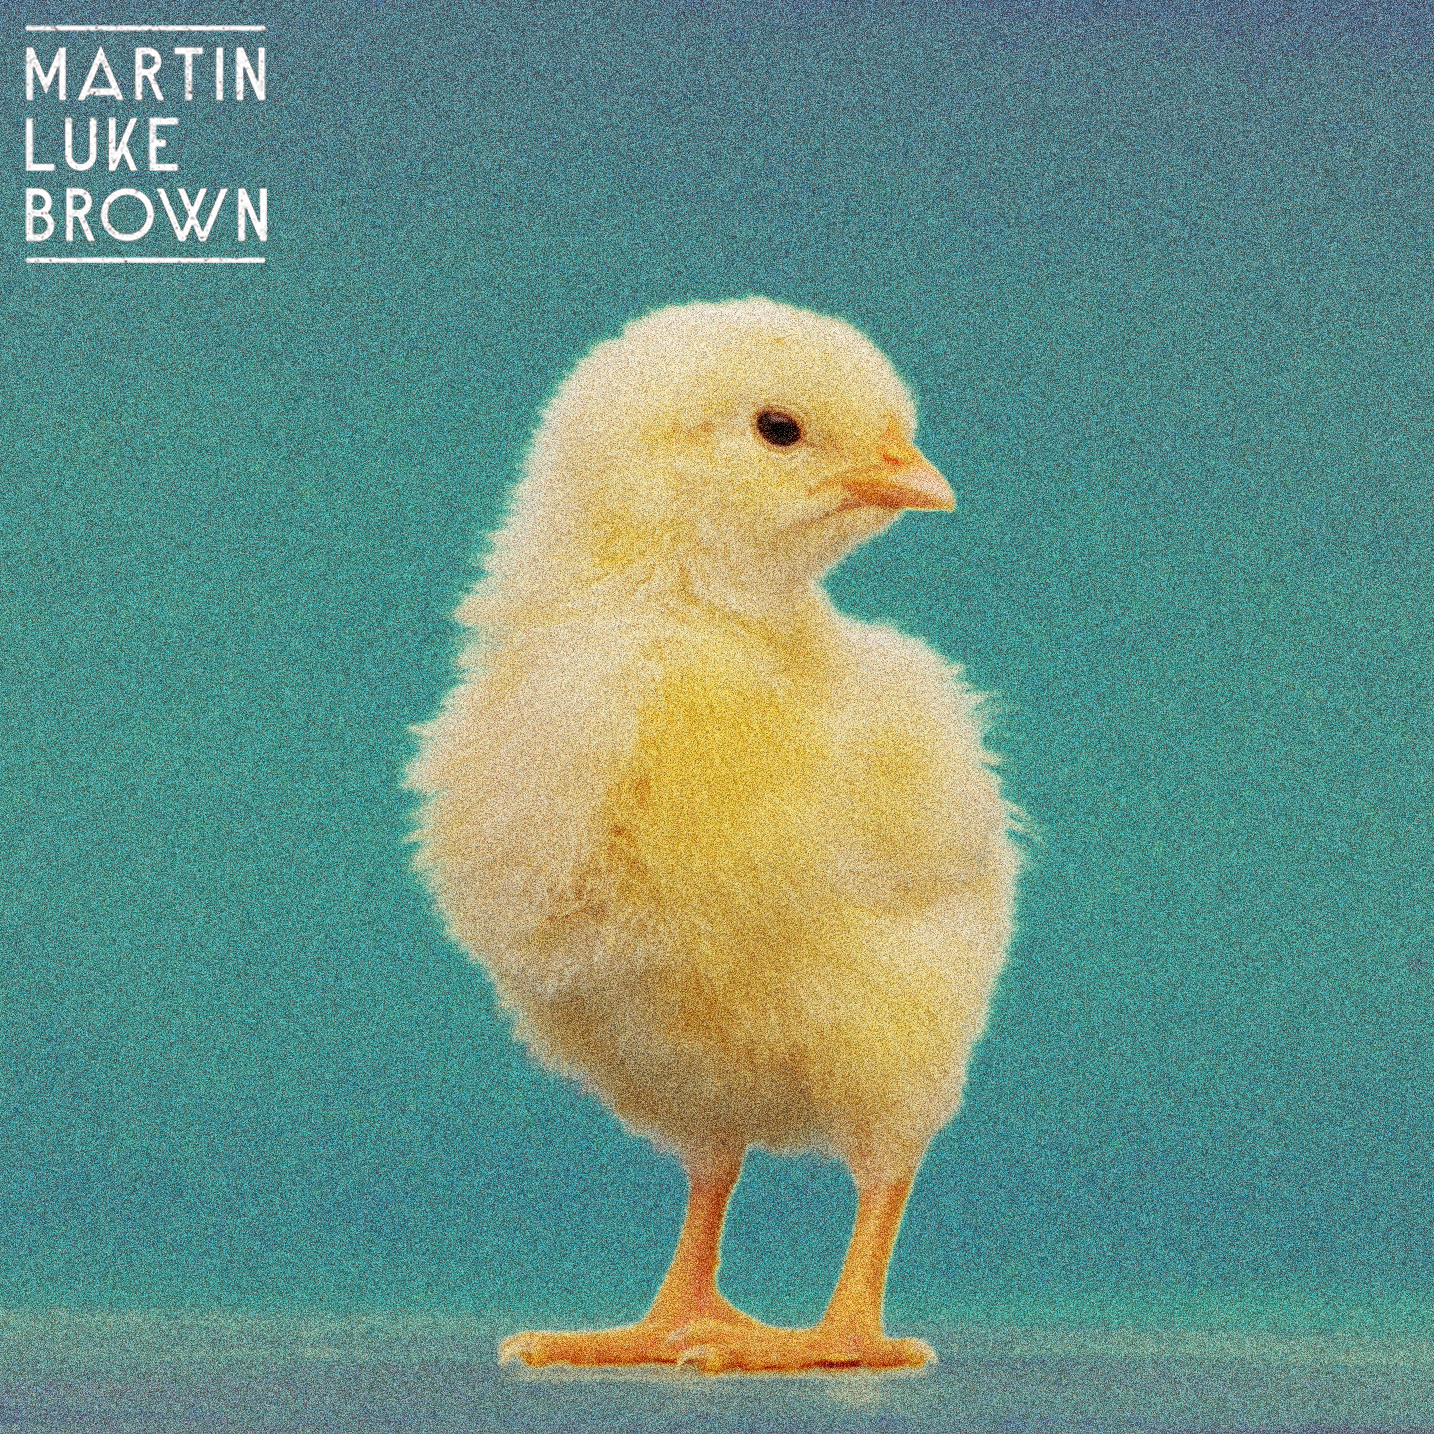 Martin Luke Brown